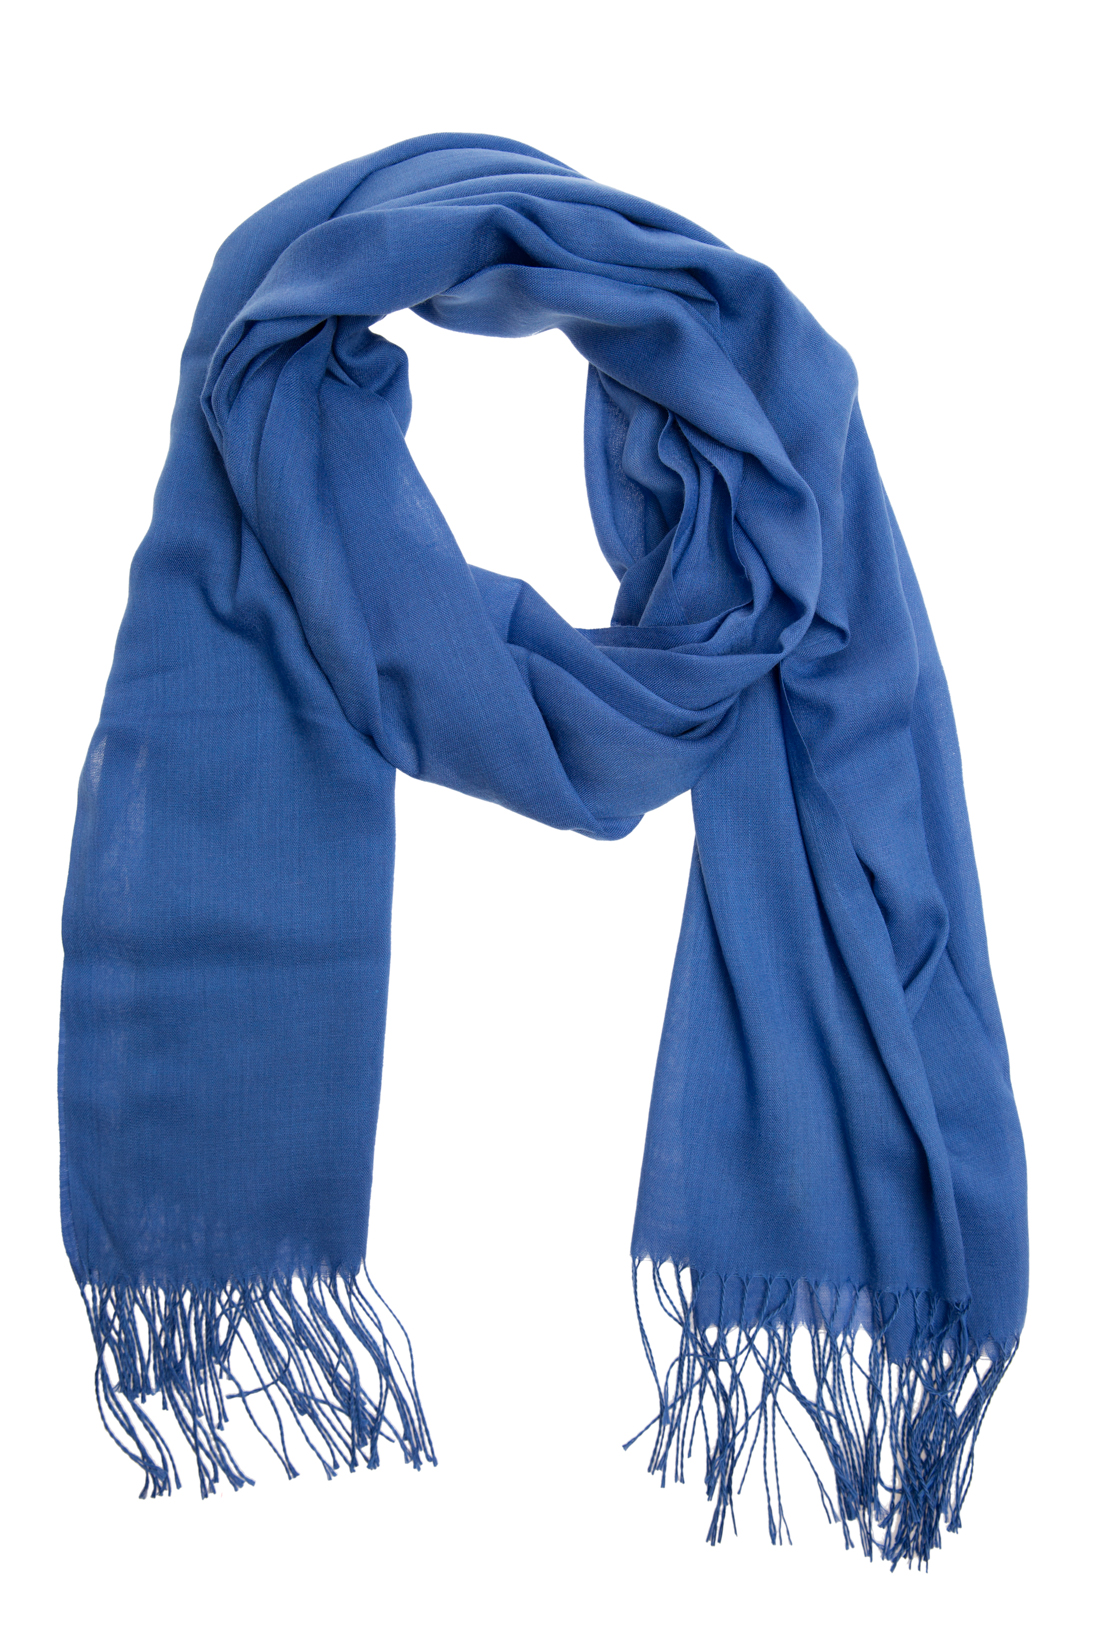 Шарф-палантин с бахромой (арт. baon B357028), размер Без/раз, цвет синий Шарф-палантин с бахромой (арт. baon B357028) - фото 1